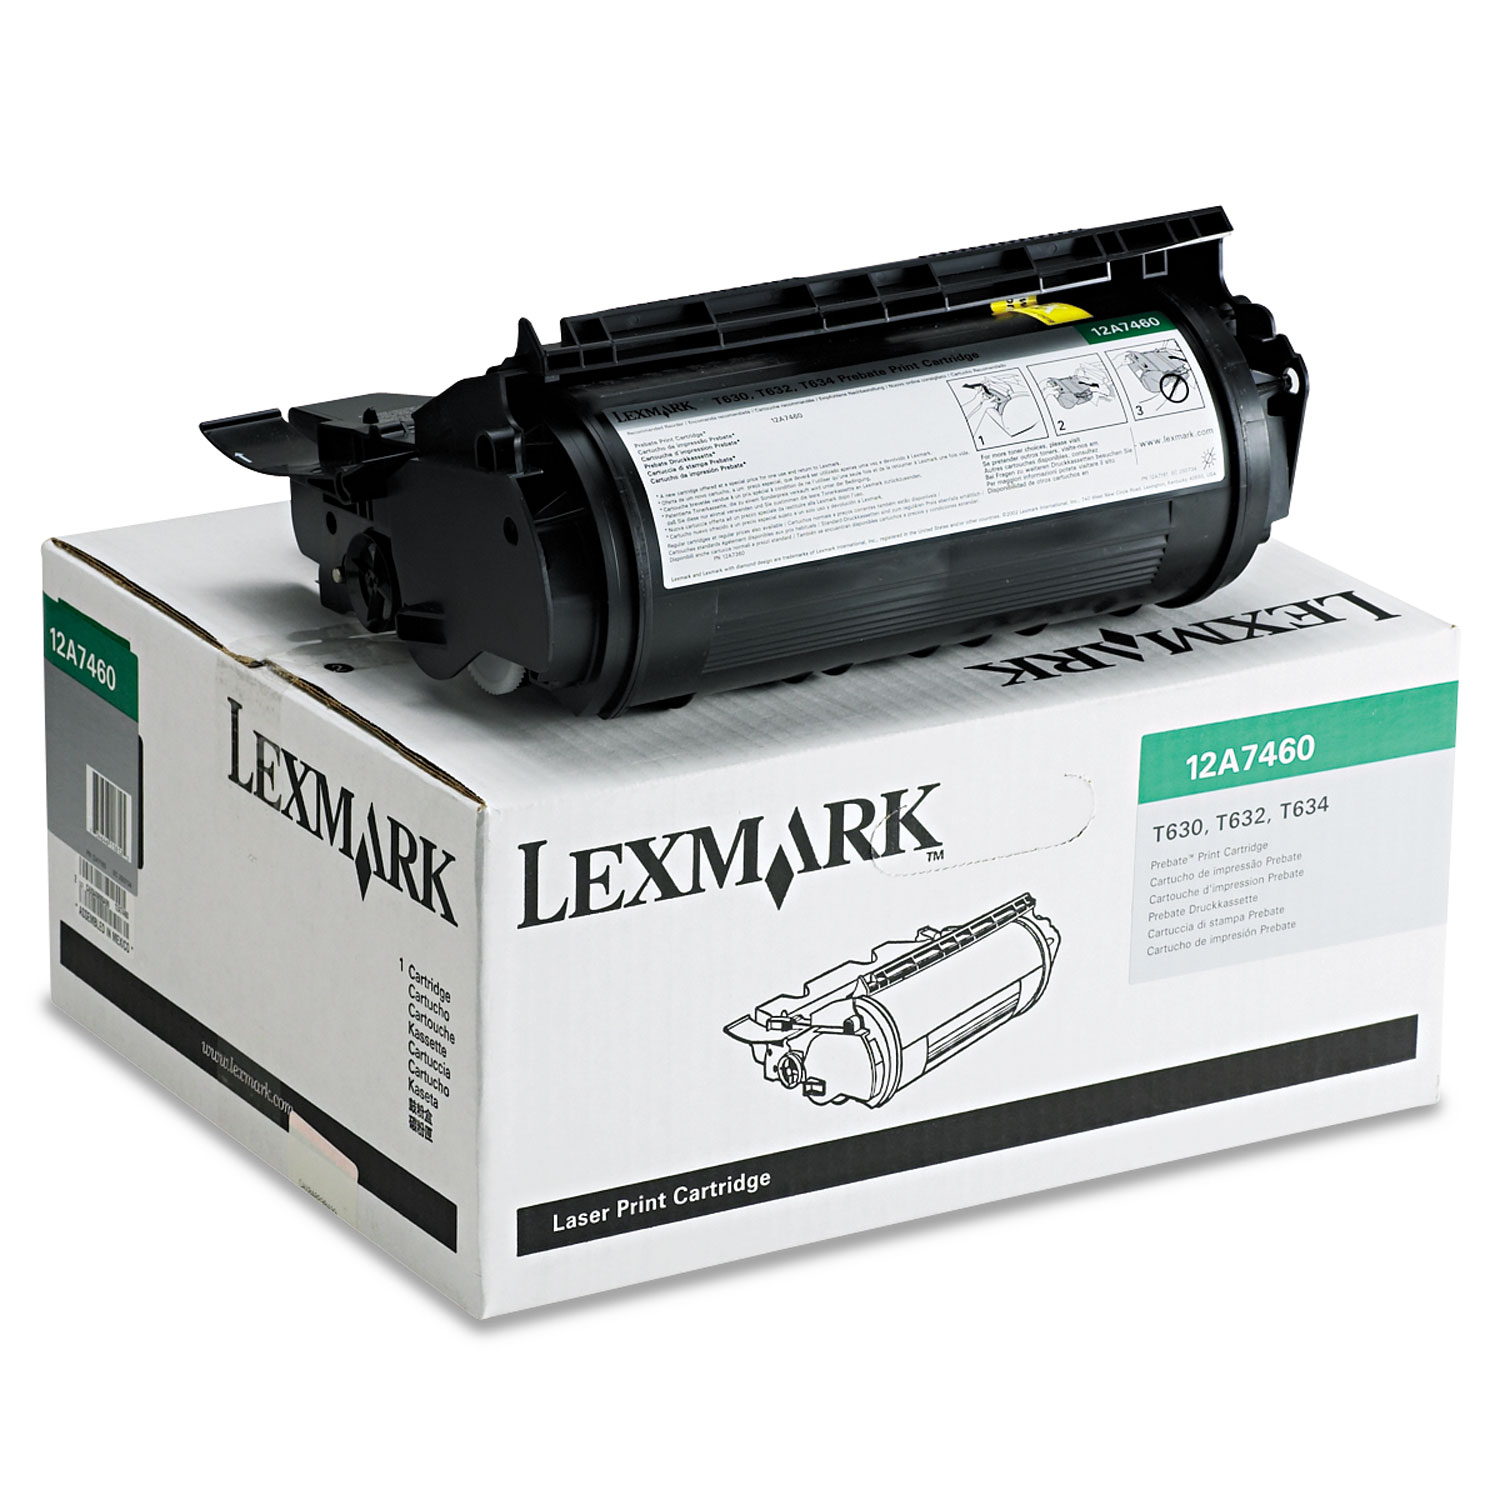 Lexmark LEX12A7460 12A7460 Toner, 5000 Page-Yield, Black